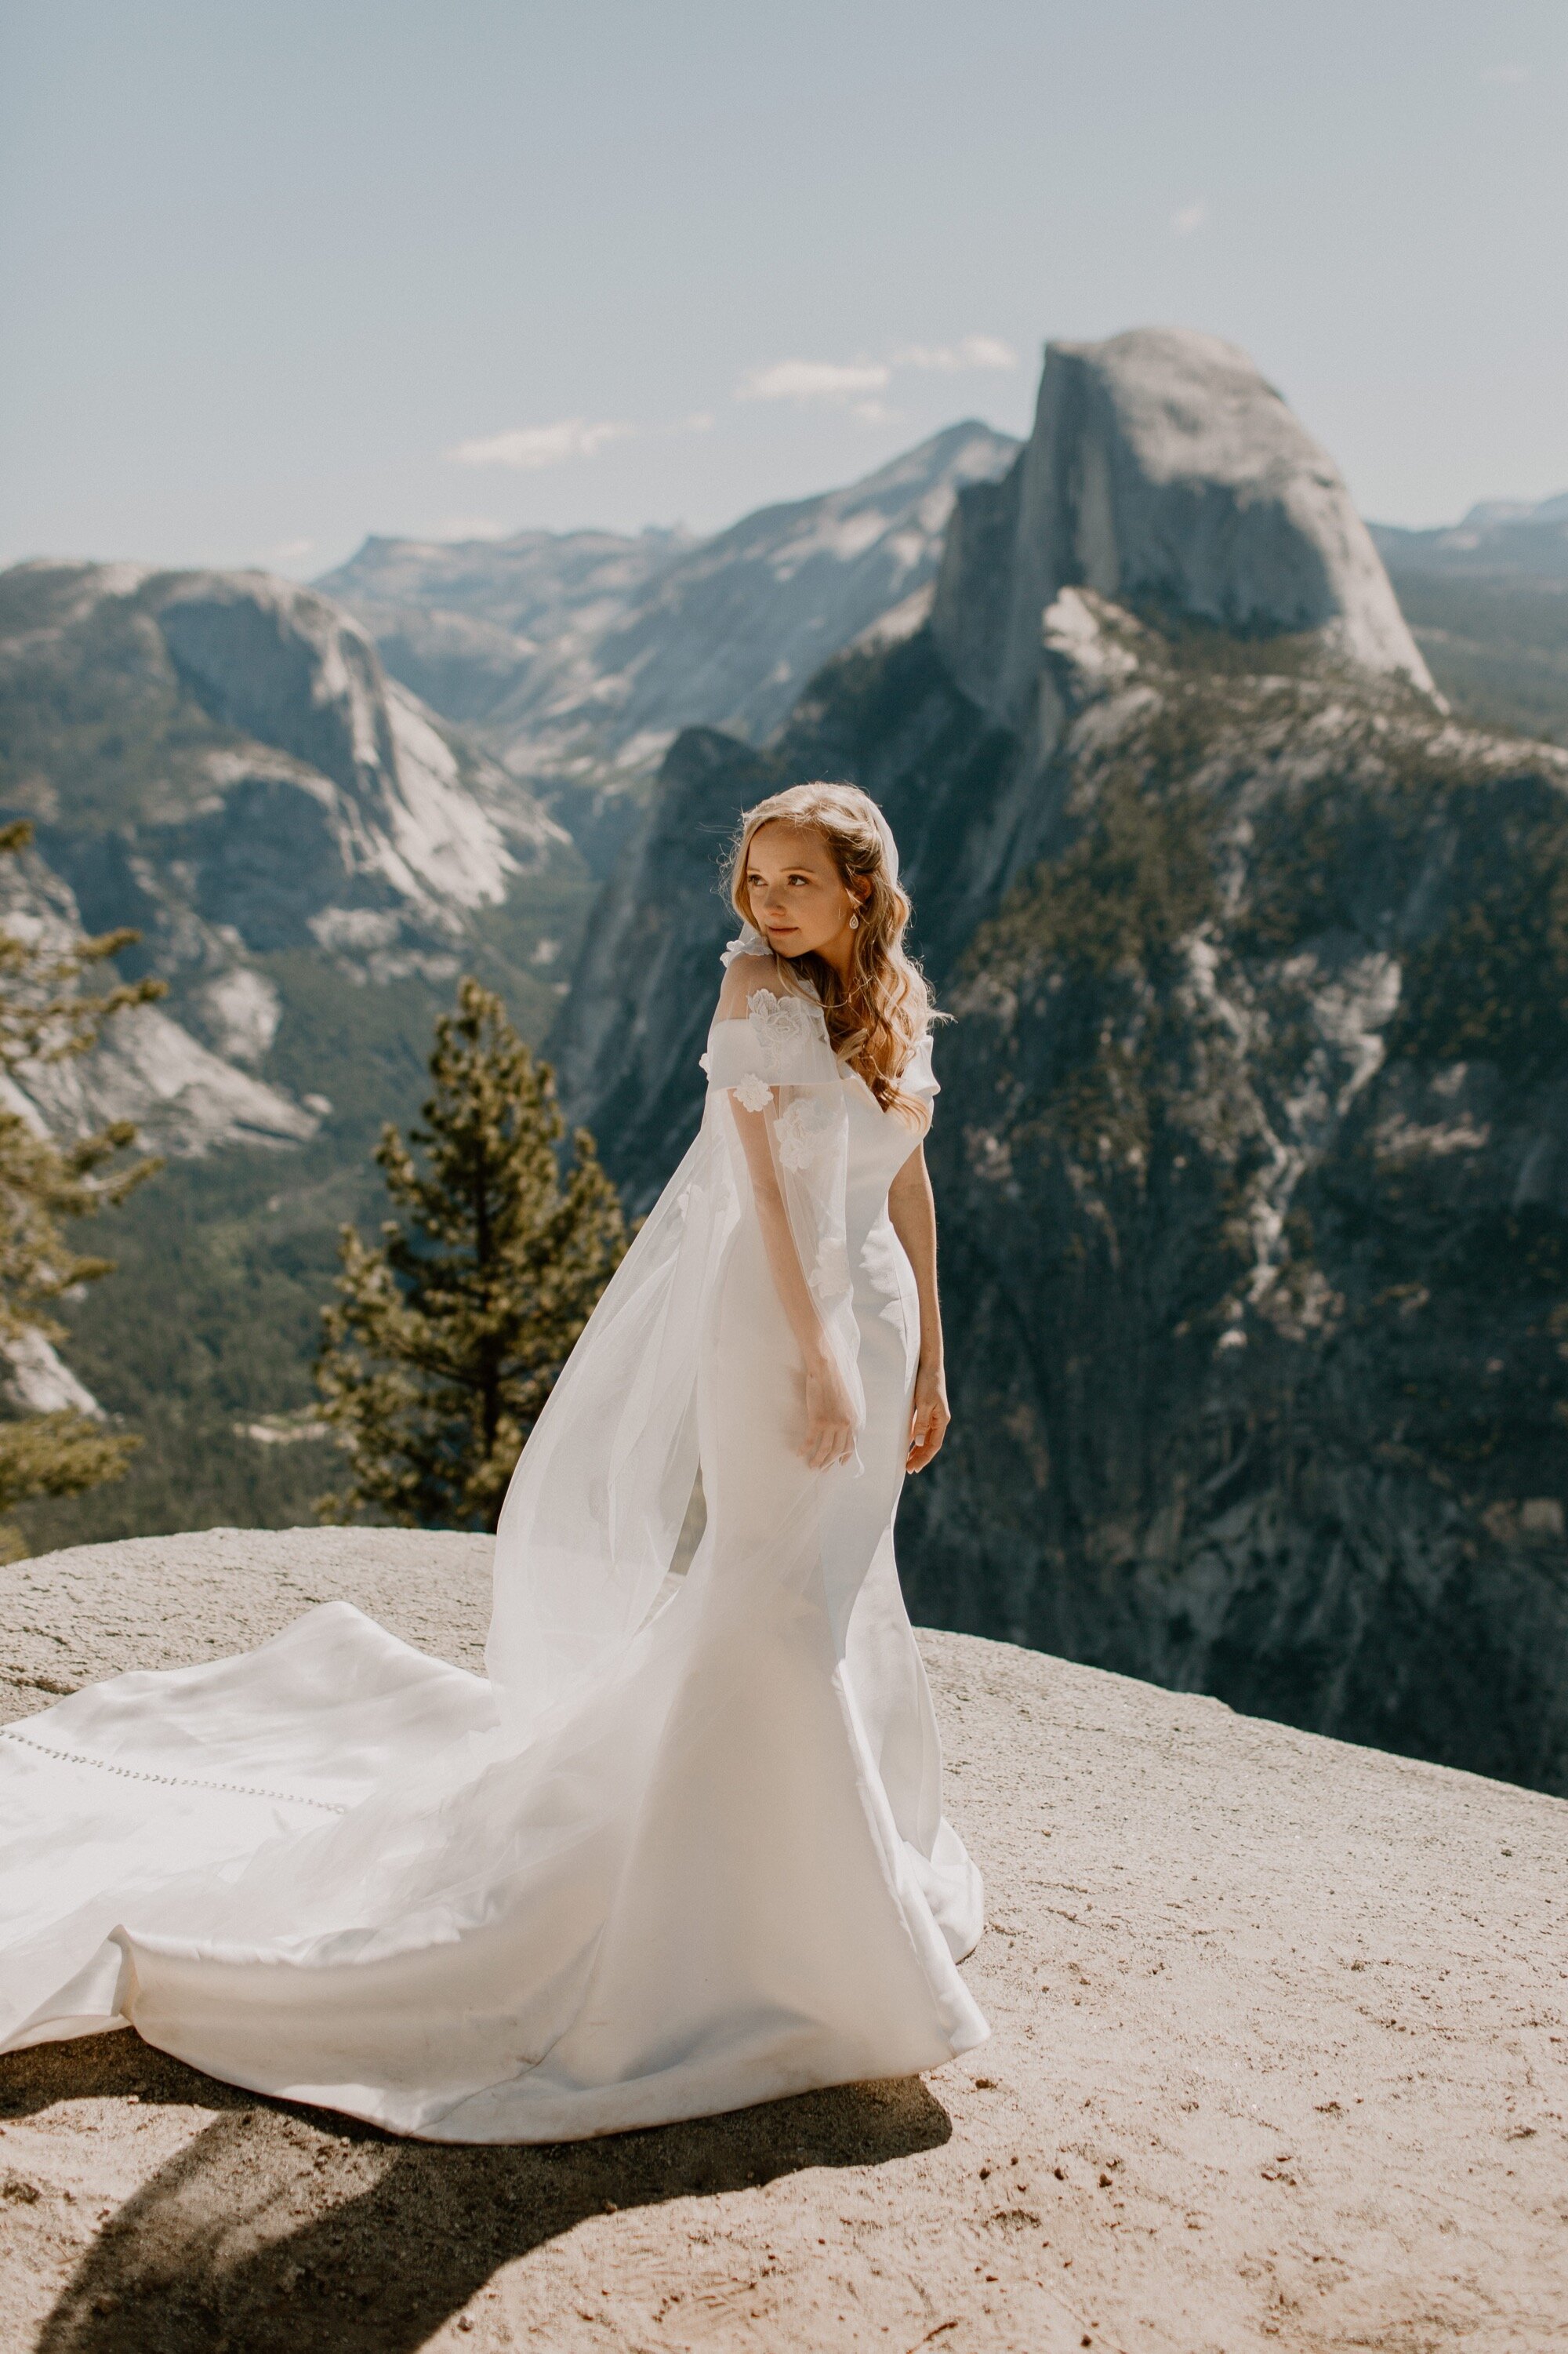 25_ginapalson_erinaidanelope_2020-306_Yosemite Elopement Bride.jpg